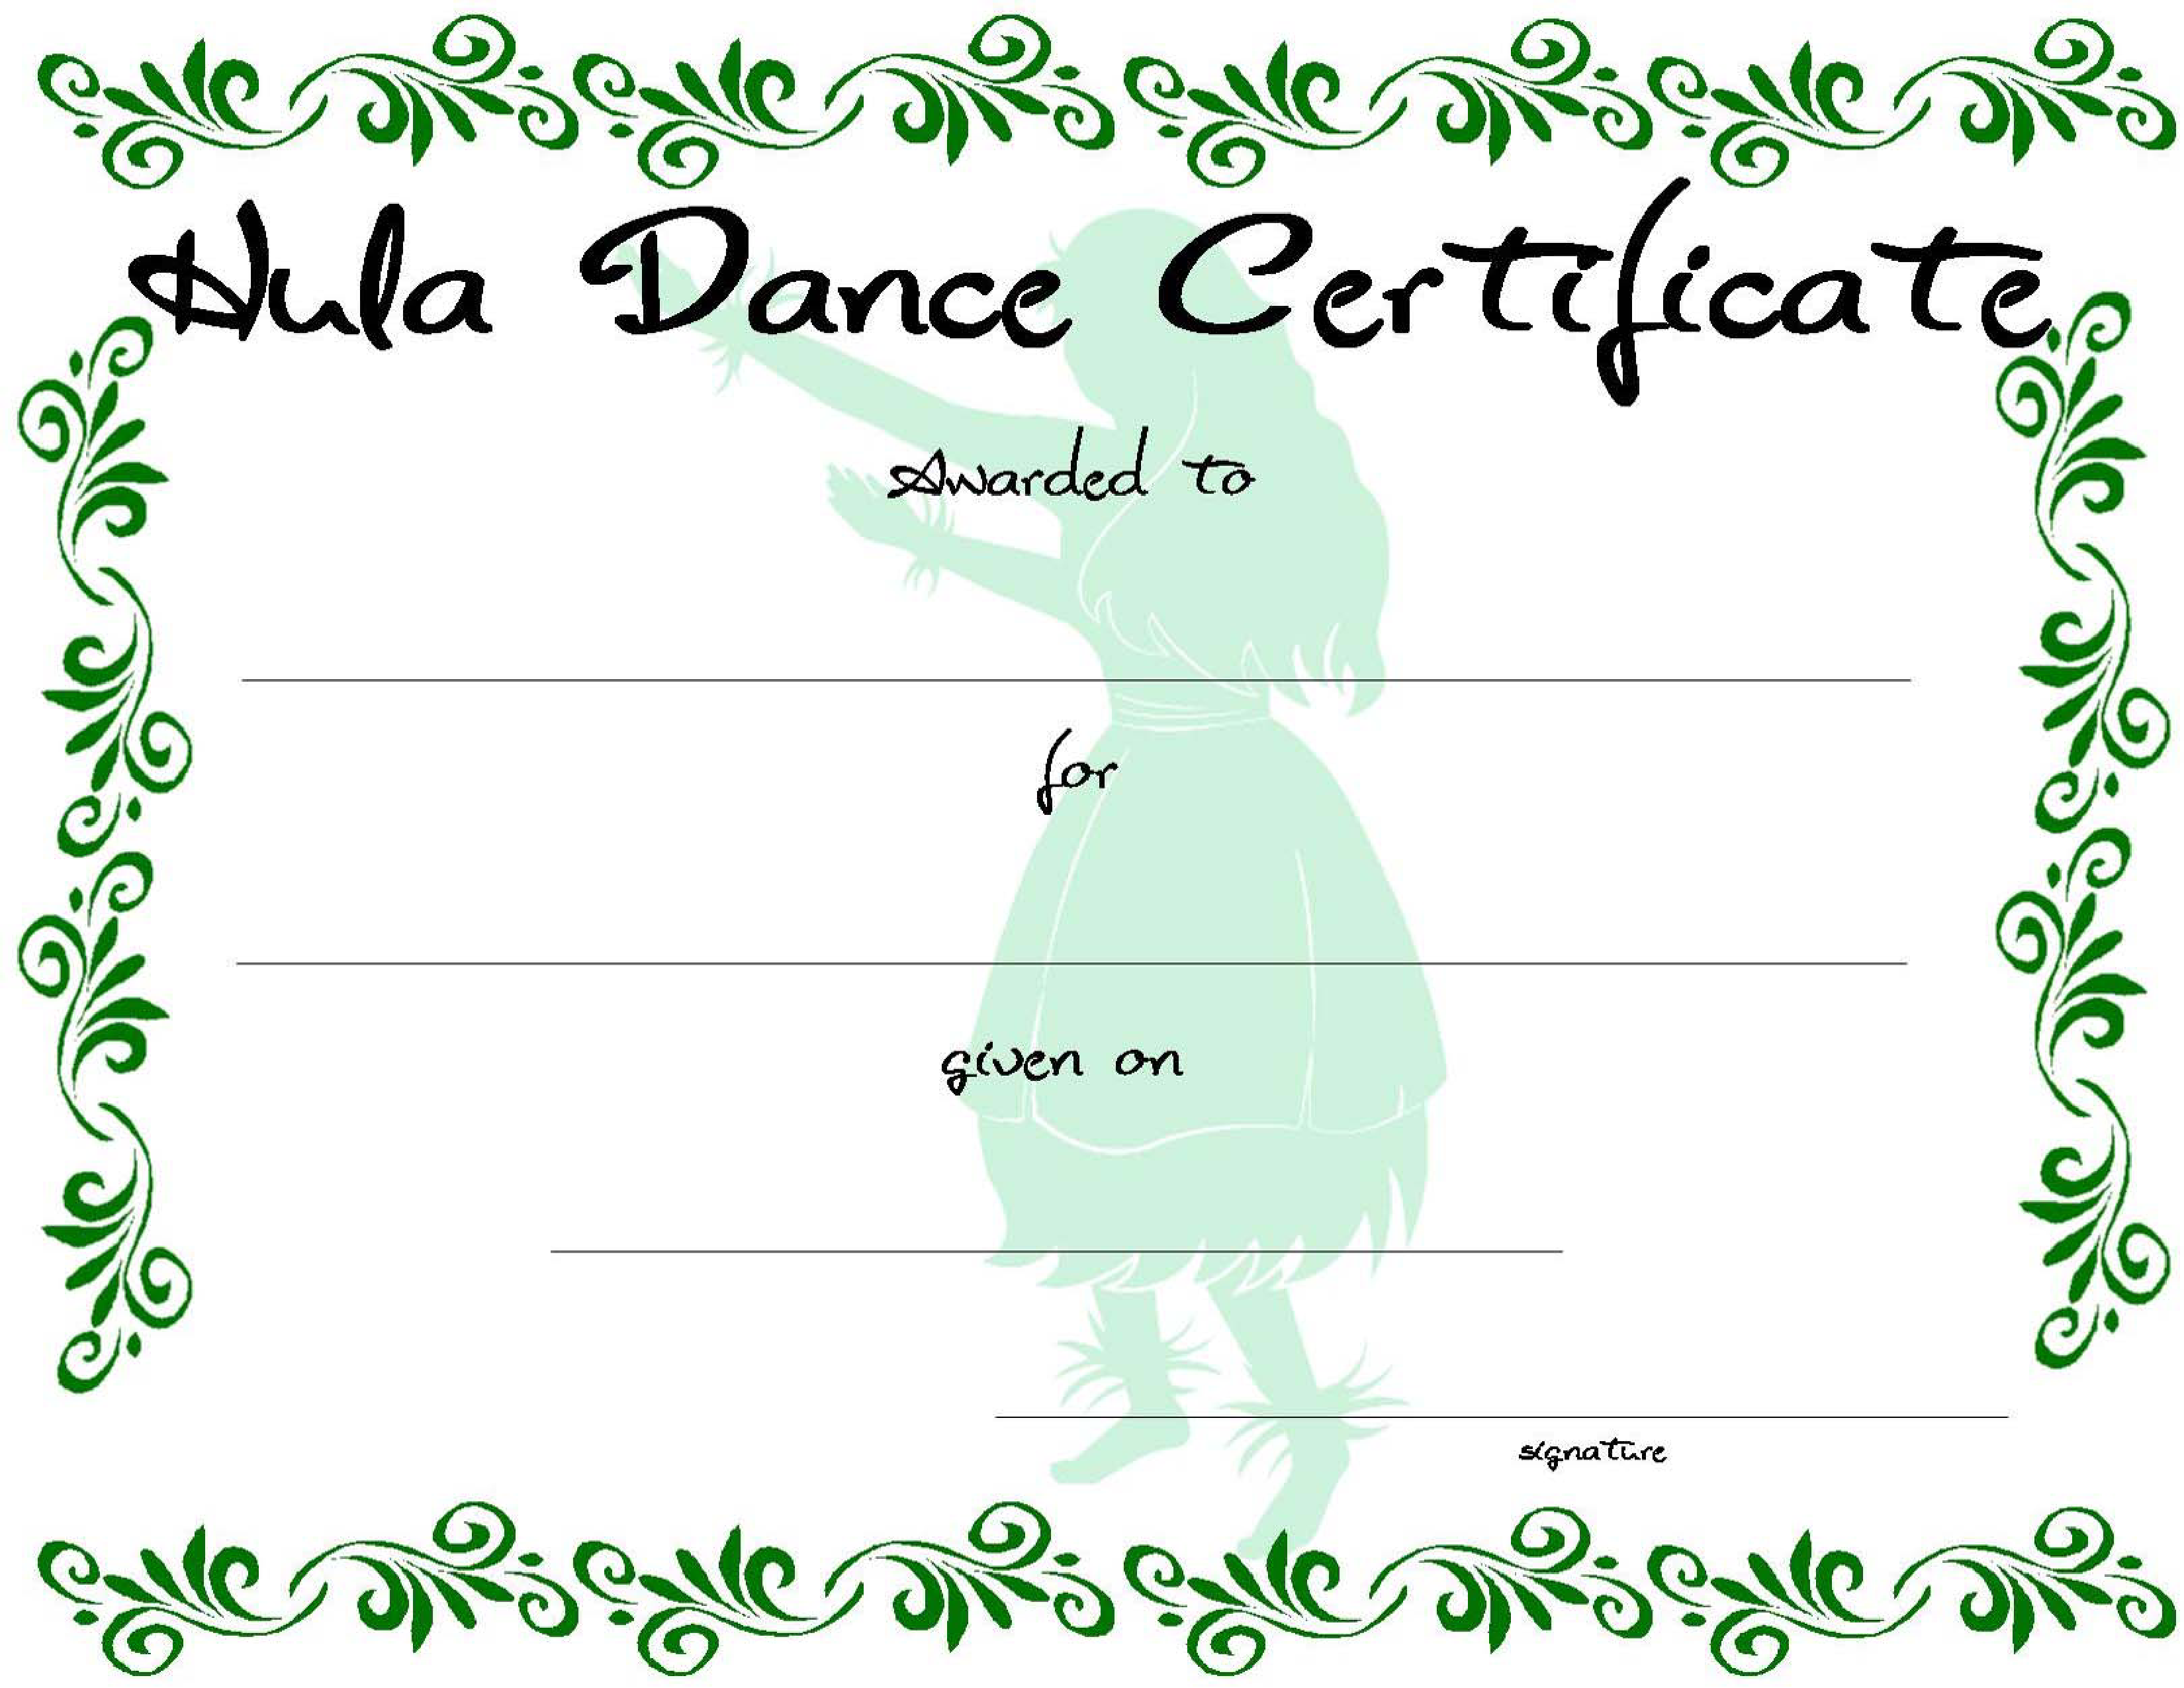 Dance Certificate Templates at allbusinesstemplates com